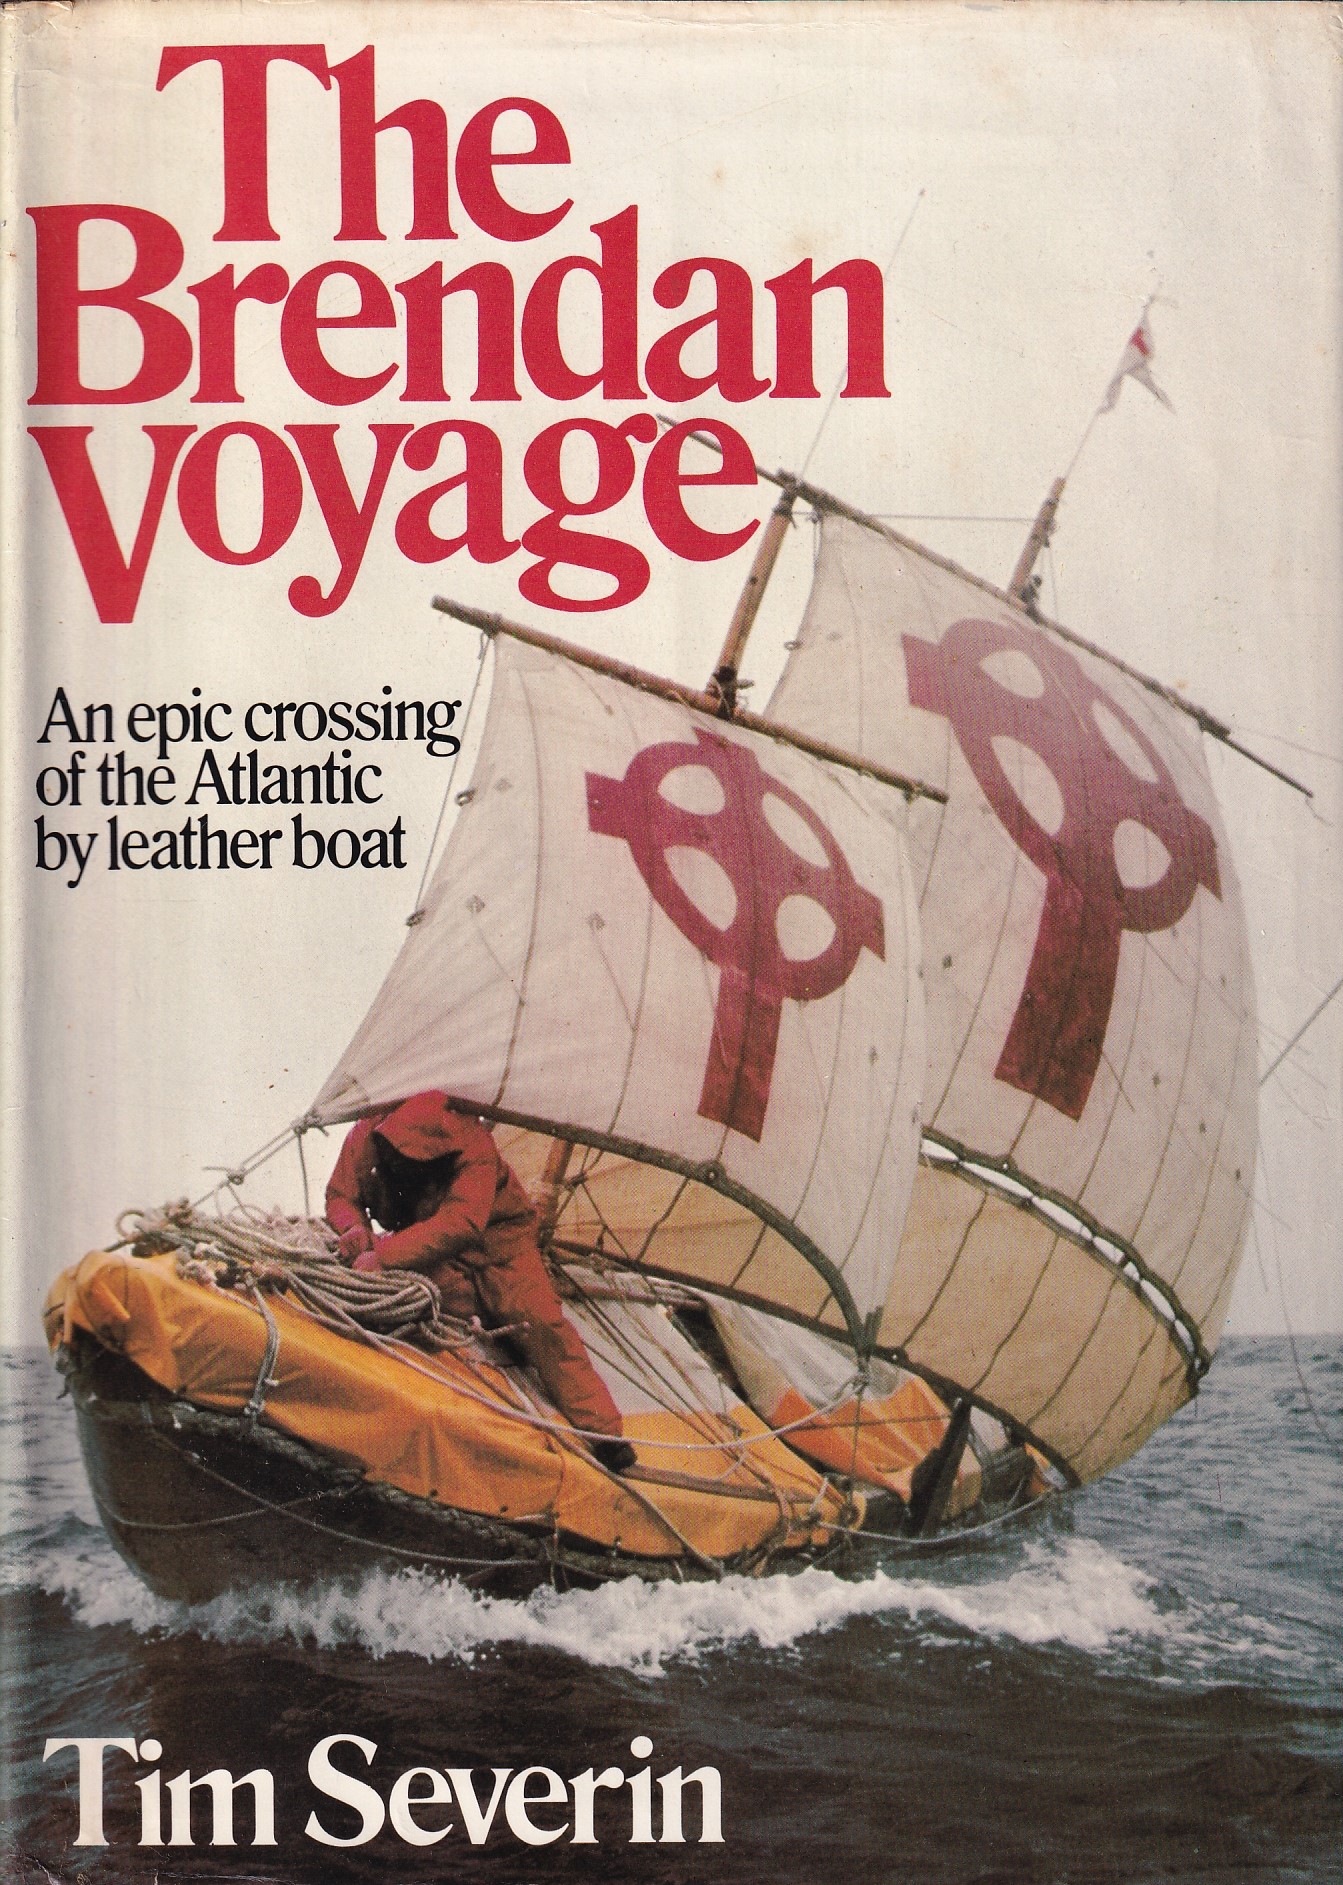 The Brendan Voyage by Tim Severin